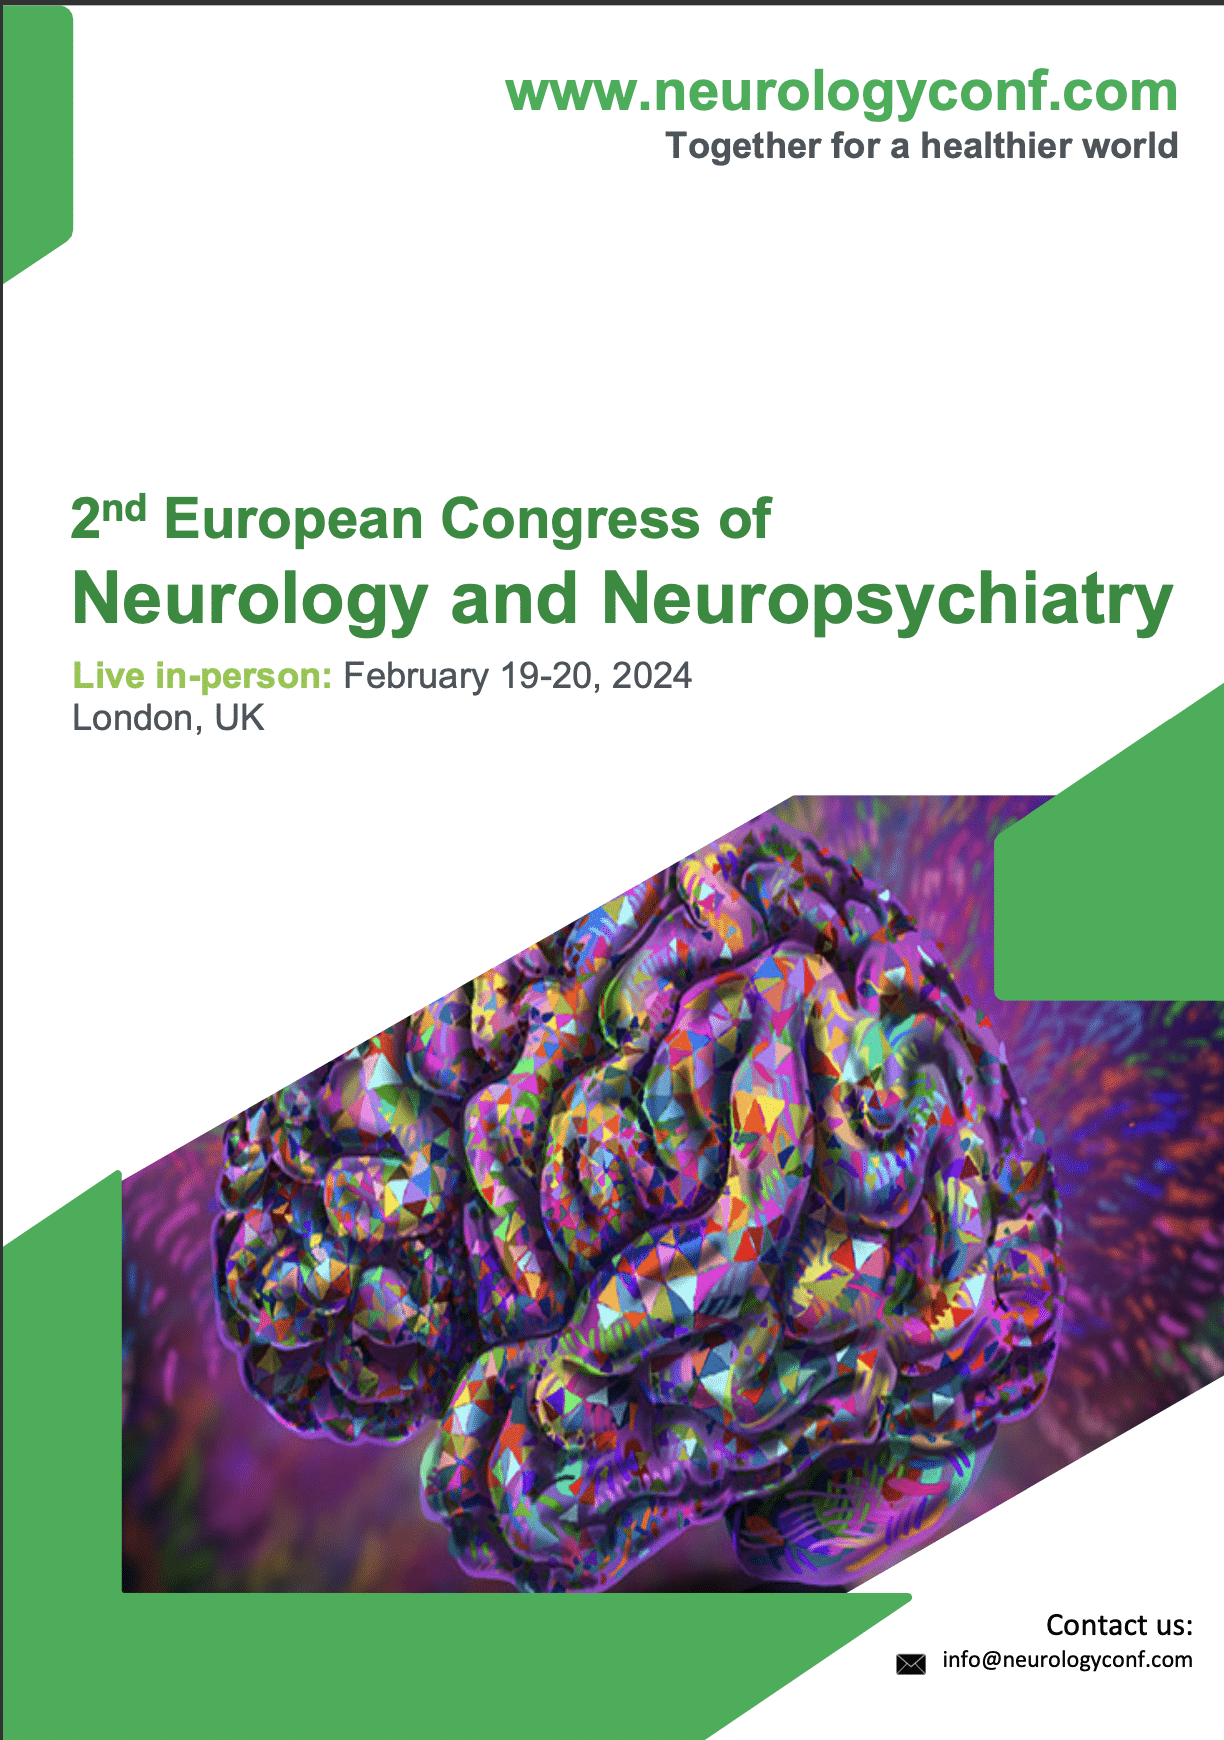 2nd European Congress of Neurology and Neuropsychiatry